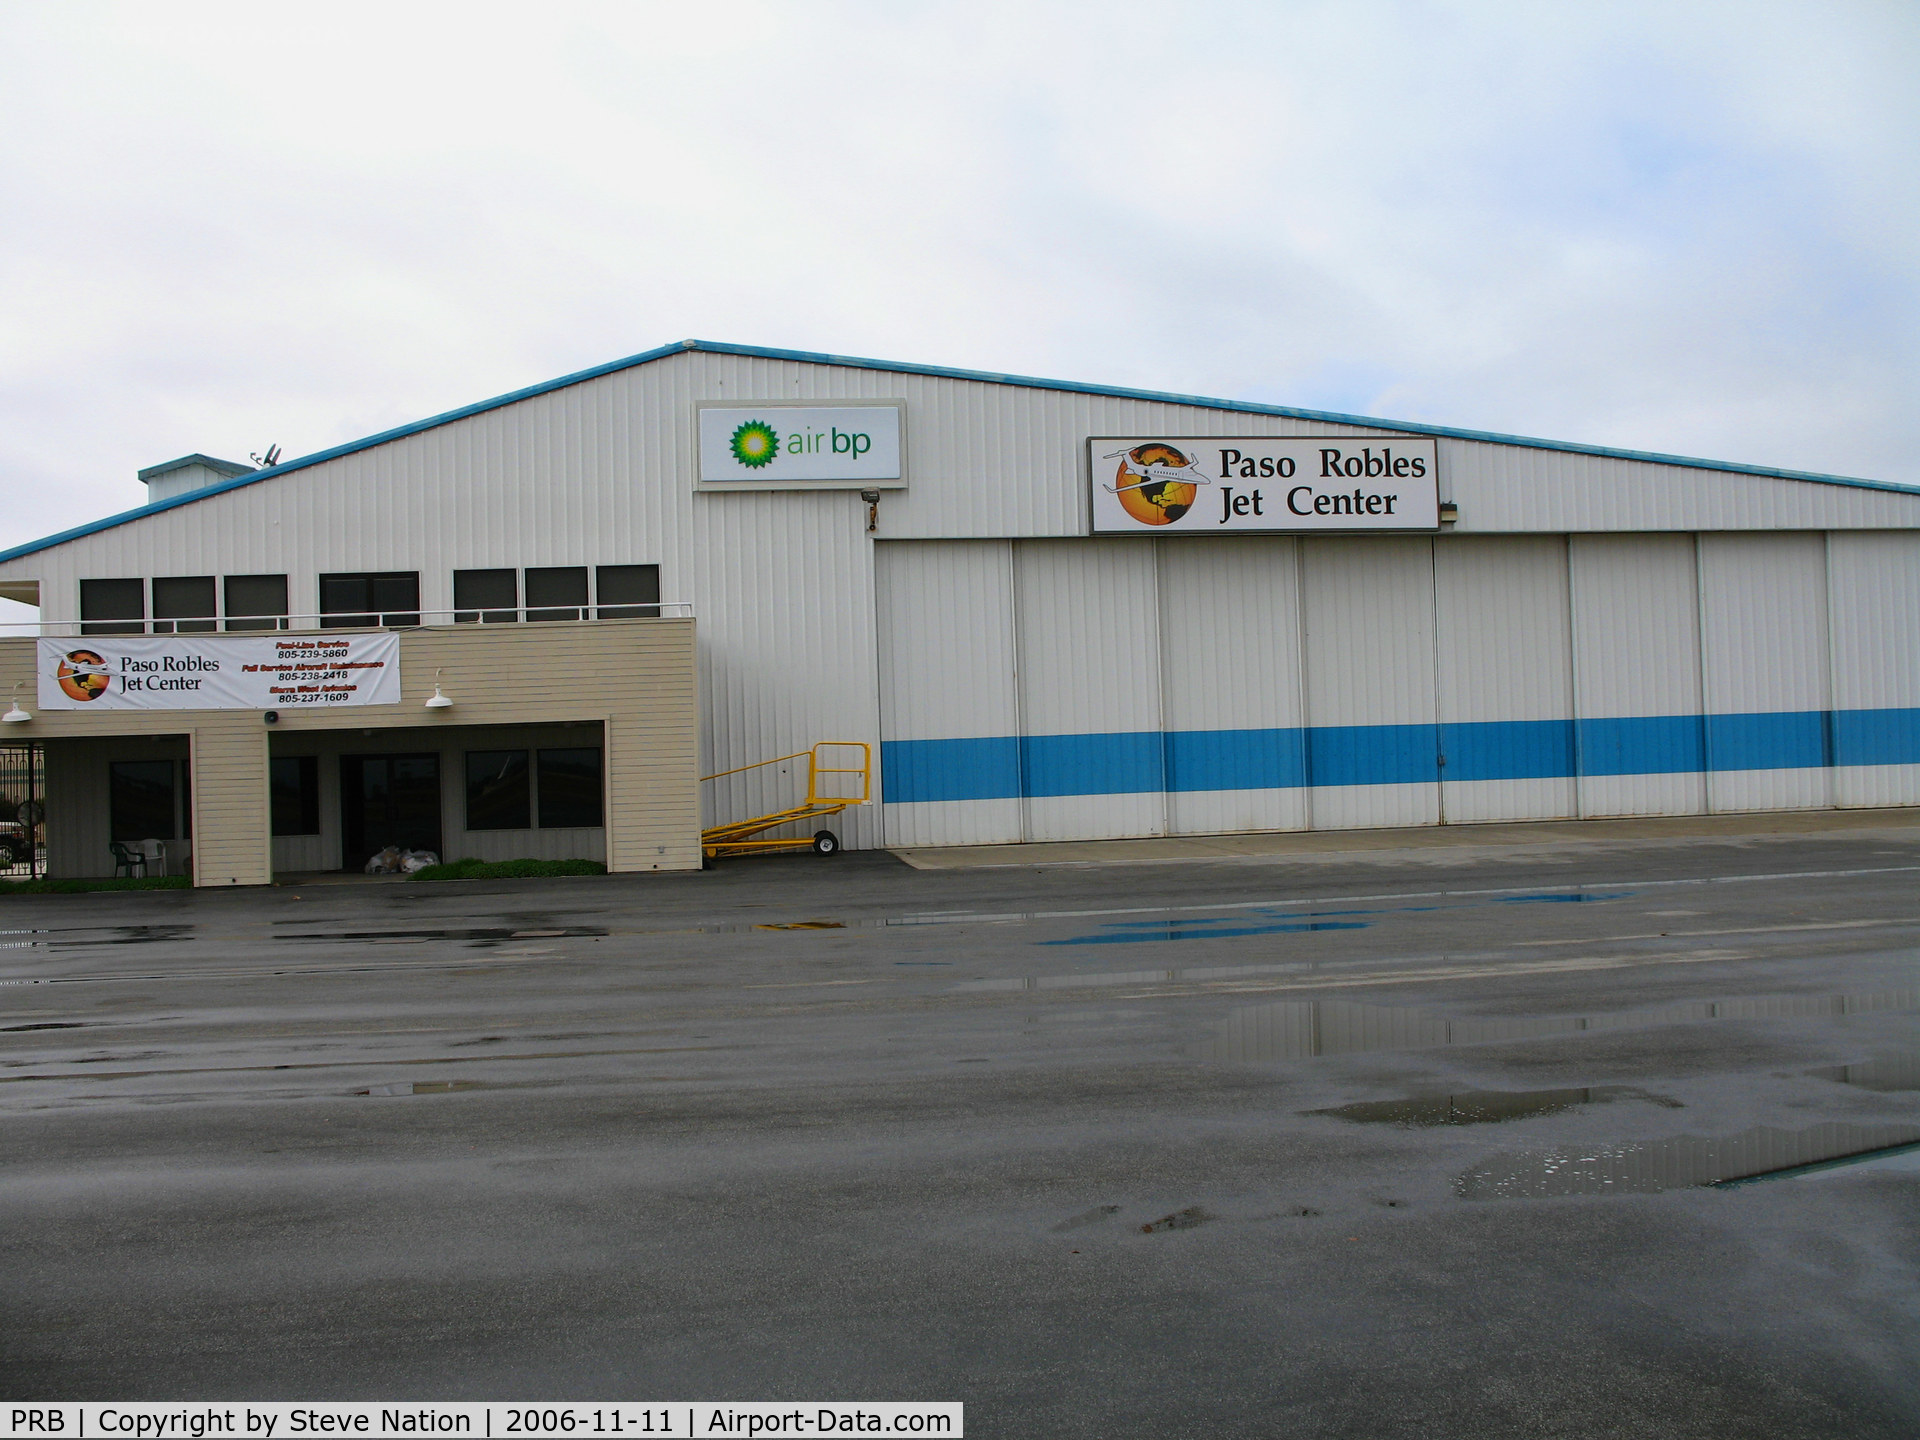 Paso Robles Municipal Airport (PRB) - Paso Robles Jet Center hangar and pilot's lounge @ Paso Robles Municipal Airport, CA